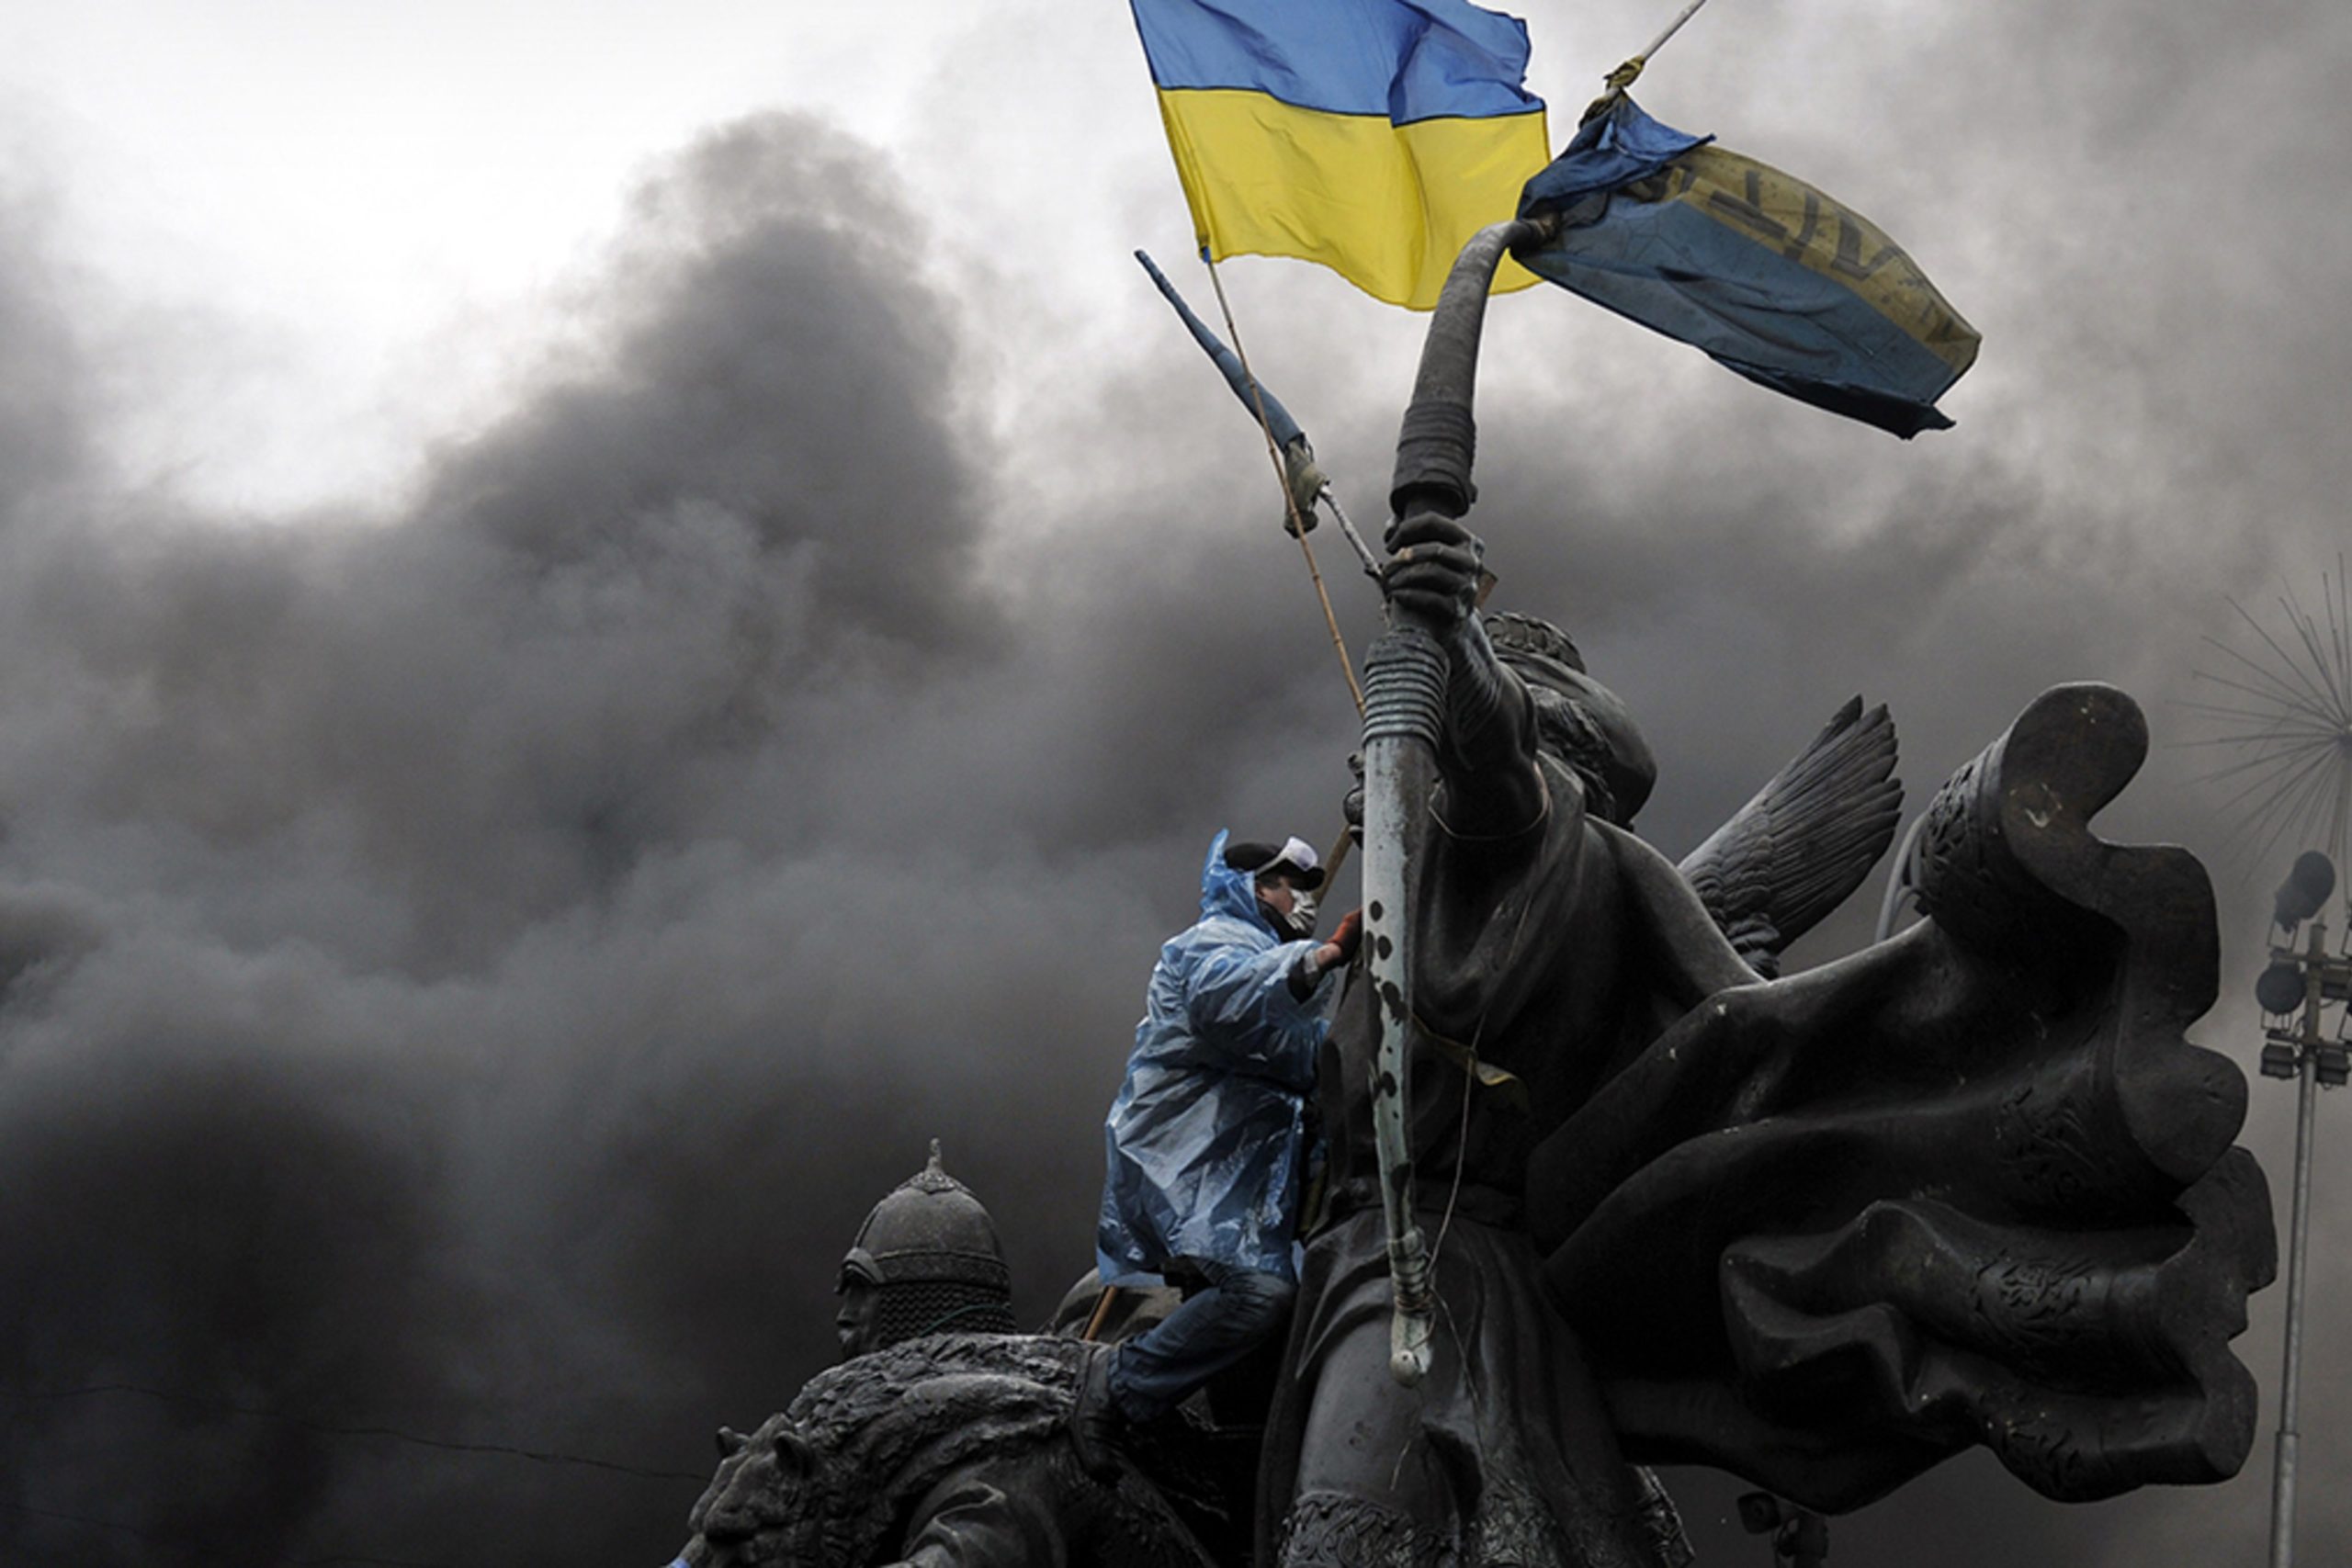 UN International Court of Justice orders "immediate suspension" of Russian invasion of Ukraine